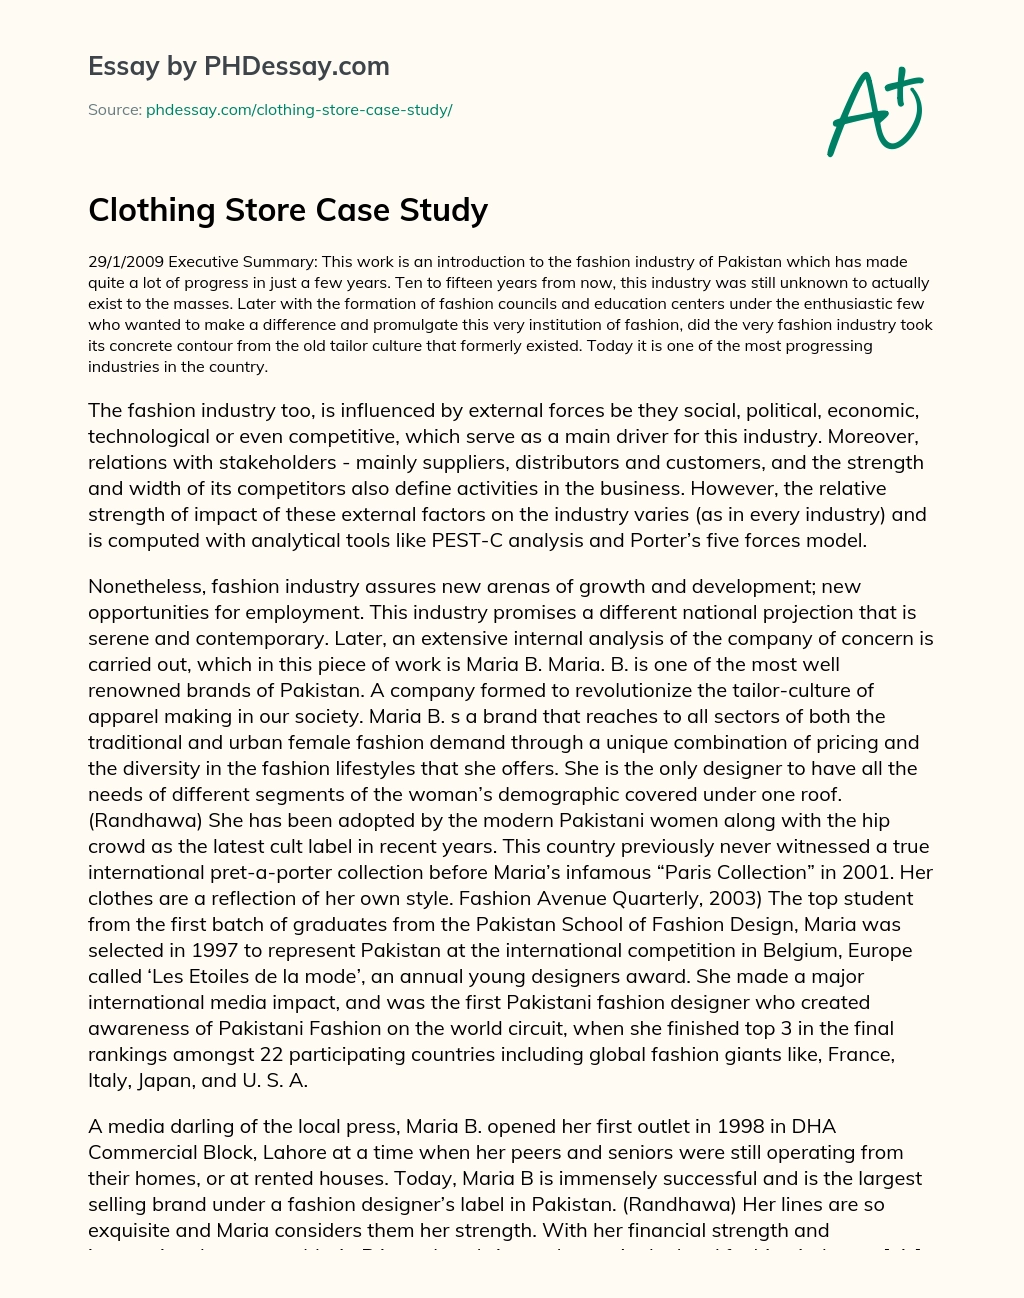 Clothing Store Case Study essay